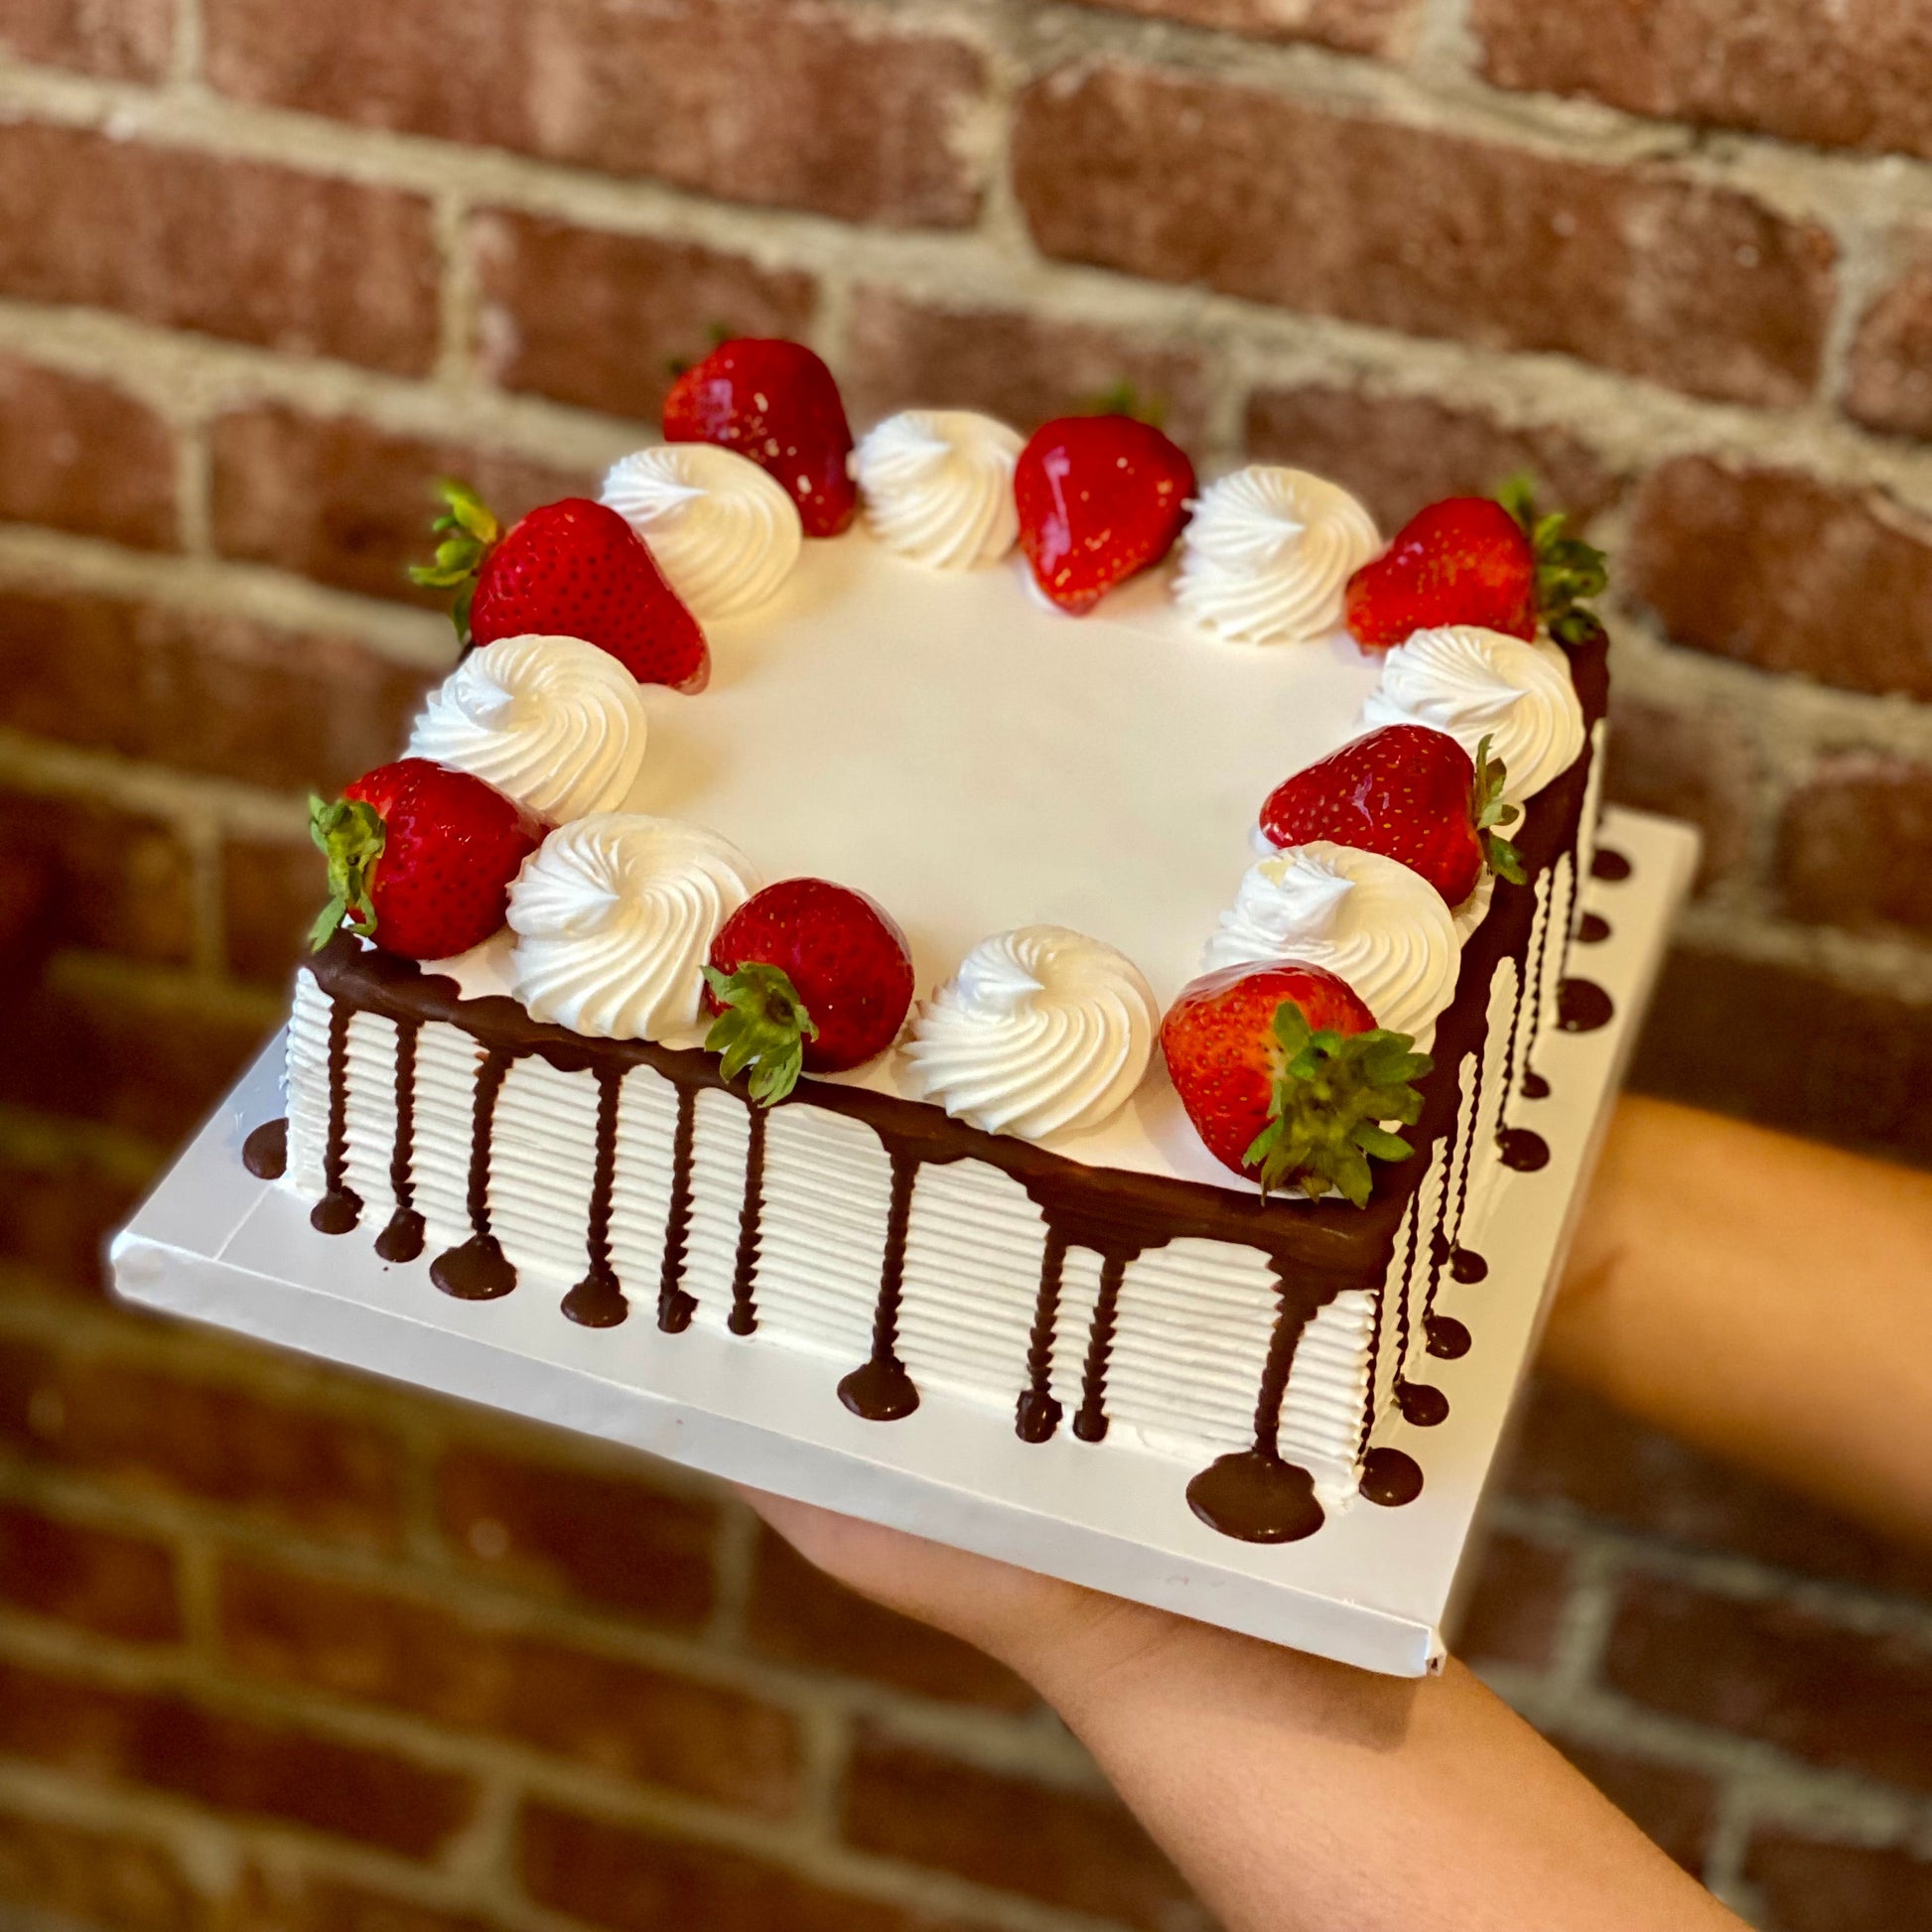 Square white cake with chocolate drip and fresh strawberries